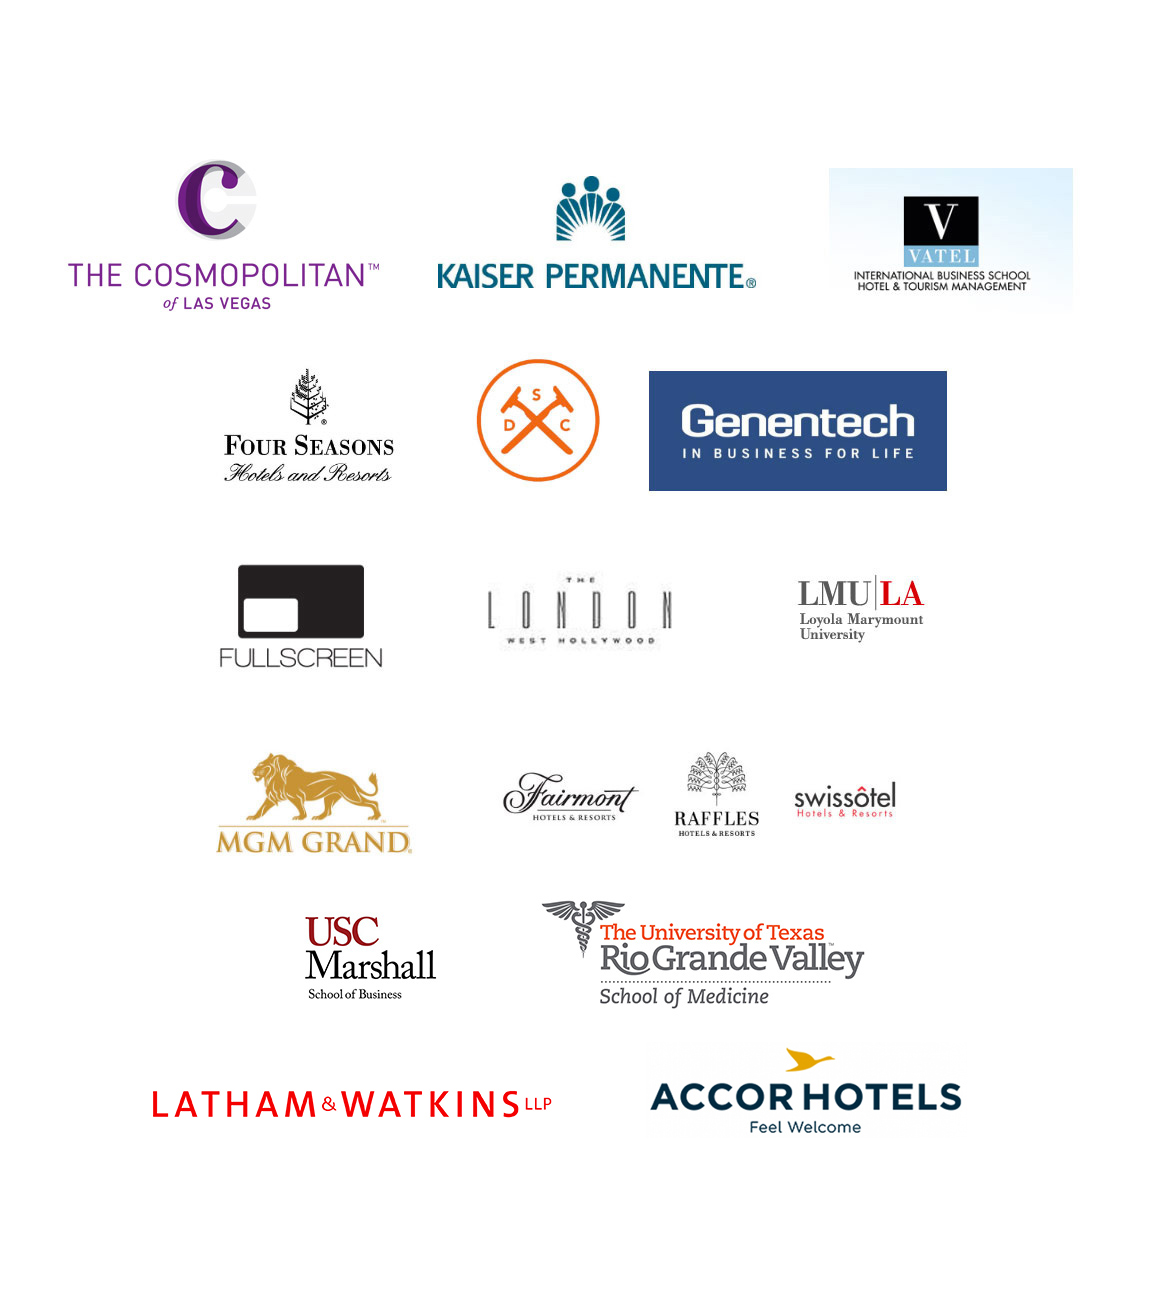 Company logos: The Cosmopolitan of Vegas, Kaiser Permanente, Dollar Shave Club and more.